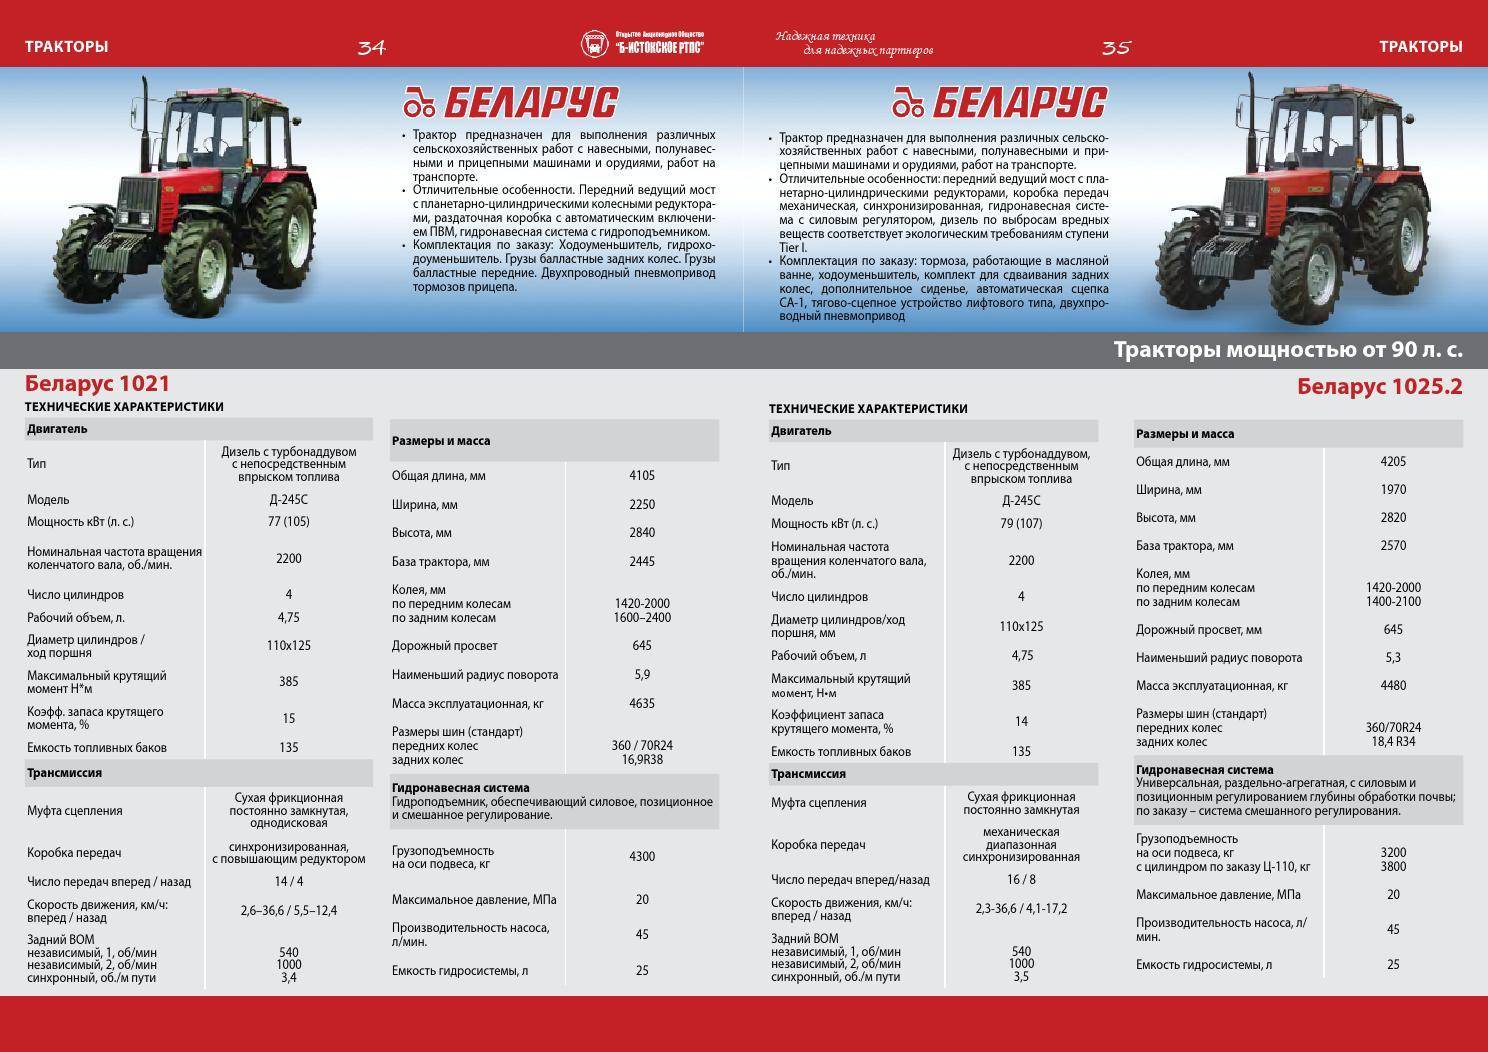 Двигатель мтз характеристики. Трактор Беларус 1221 технические характеристики. Ширина колеса трактора МТЗ 82. Размер задних колес МТЗ 82.1. Колеса трактор МТЗ габариты.